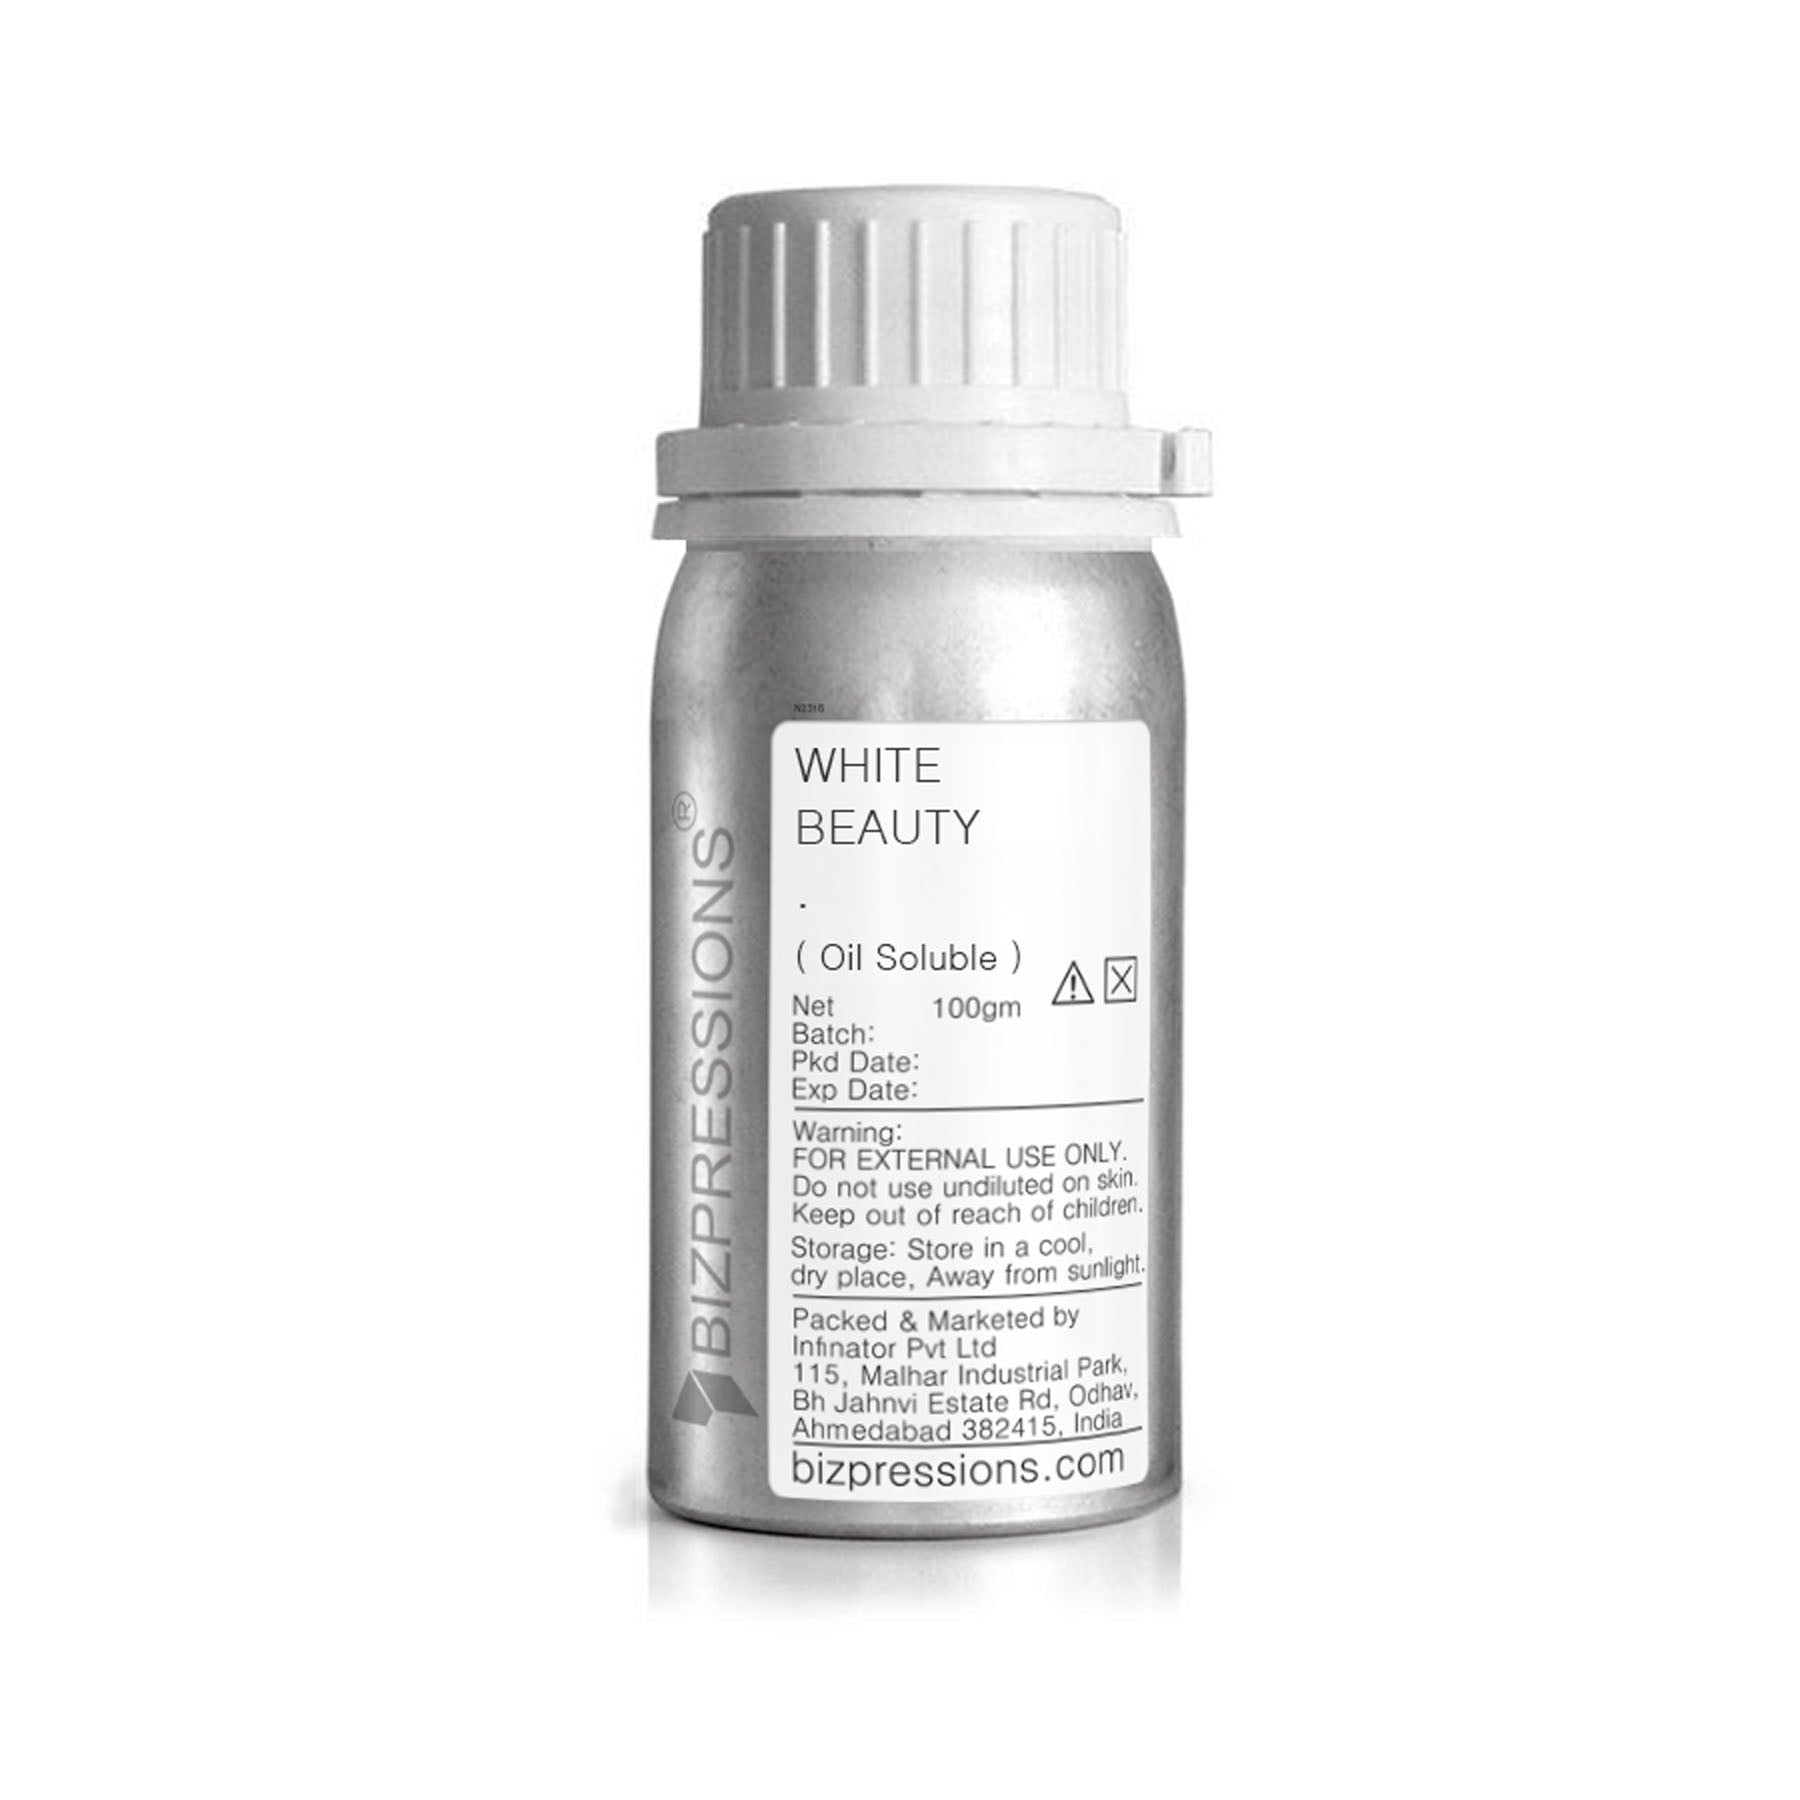 WHITE BEAUTY - Fragrance ( Oil Soluble ) - 100 gm